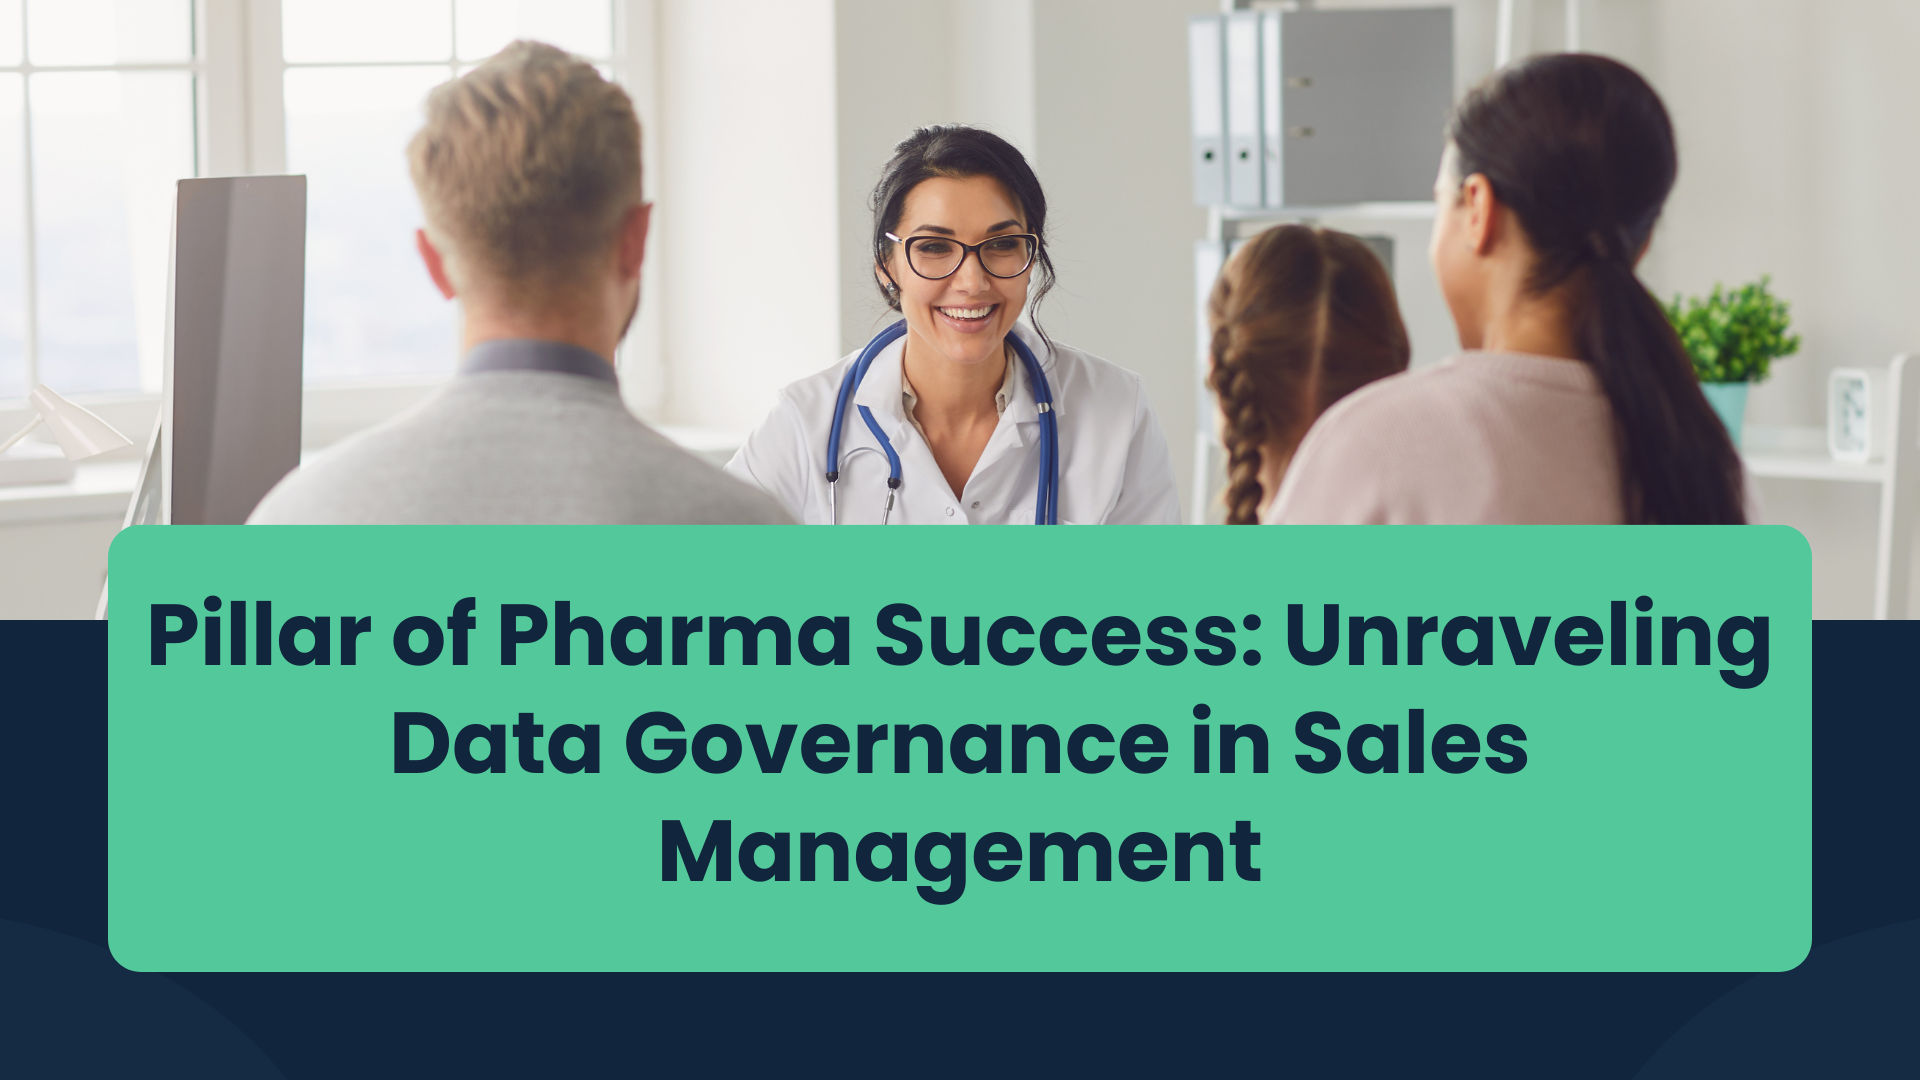 Data Governance in Sales Management